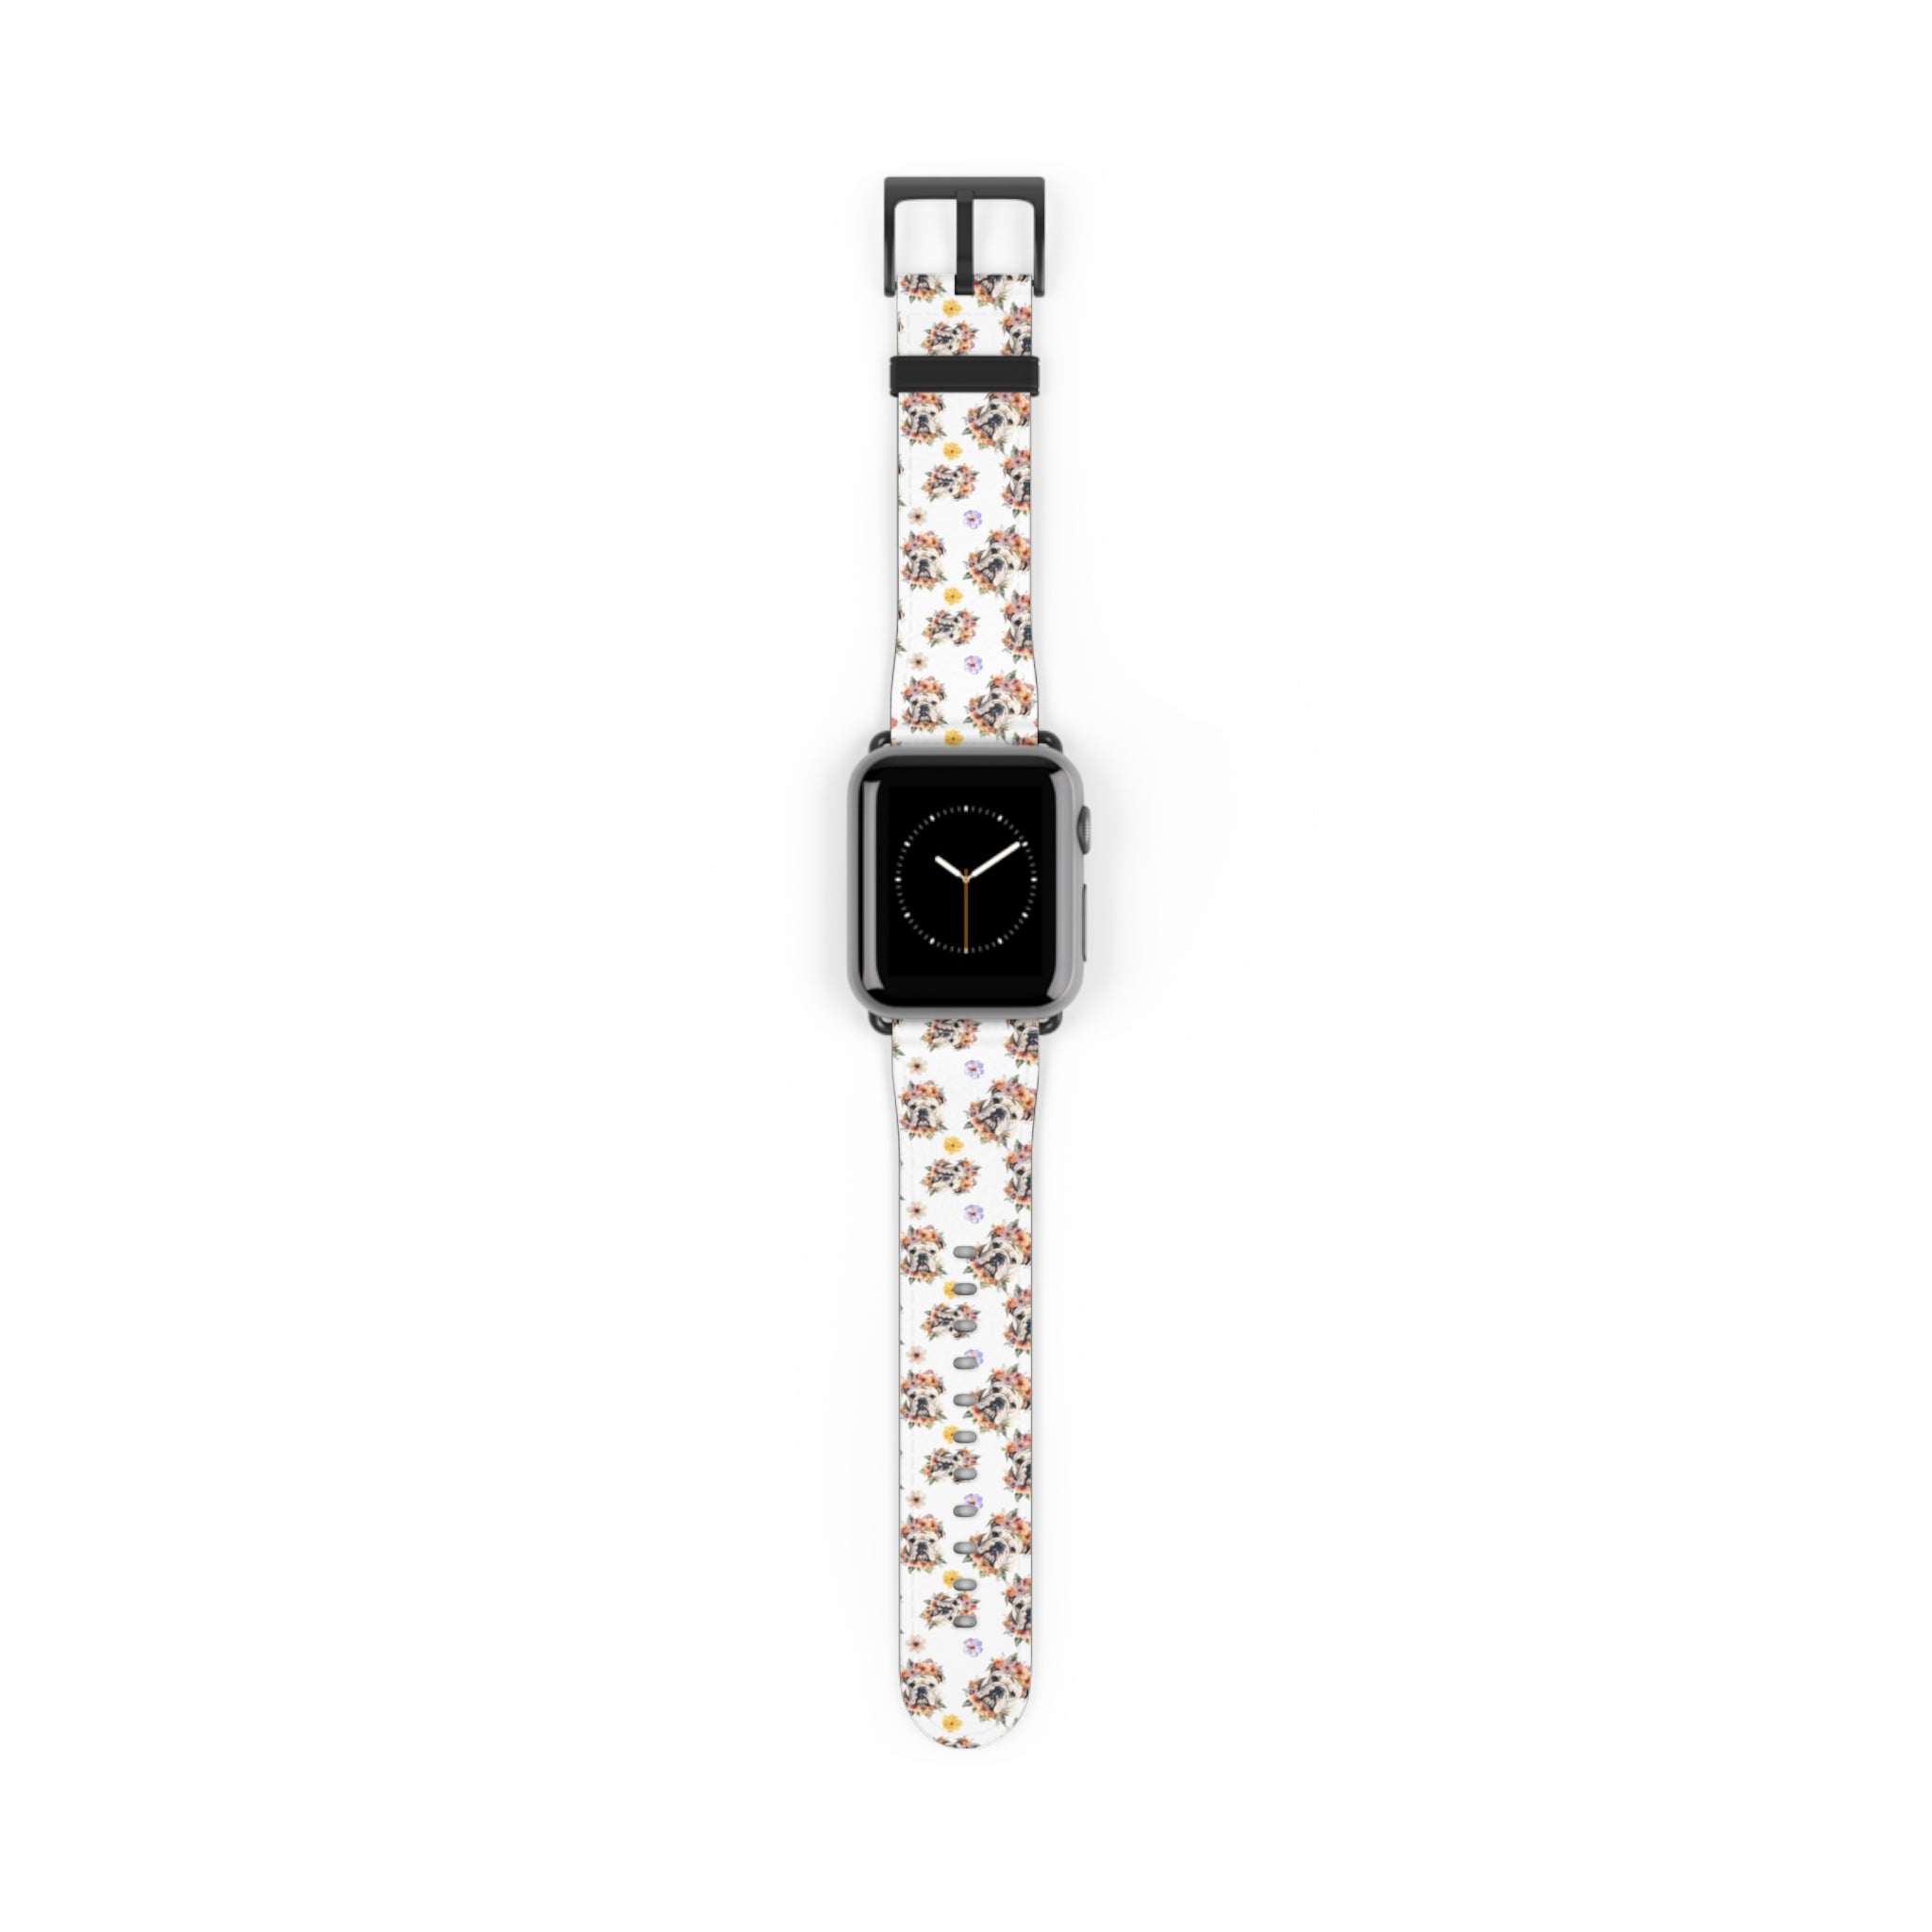 Bulldog Apple Watch Bands (English/Flower)